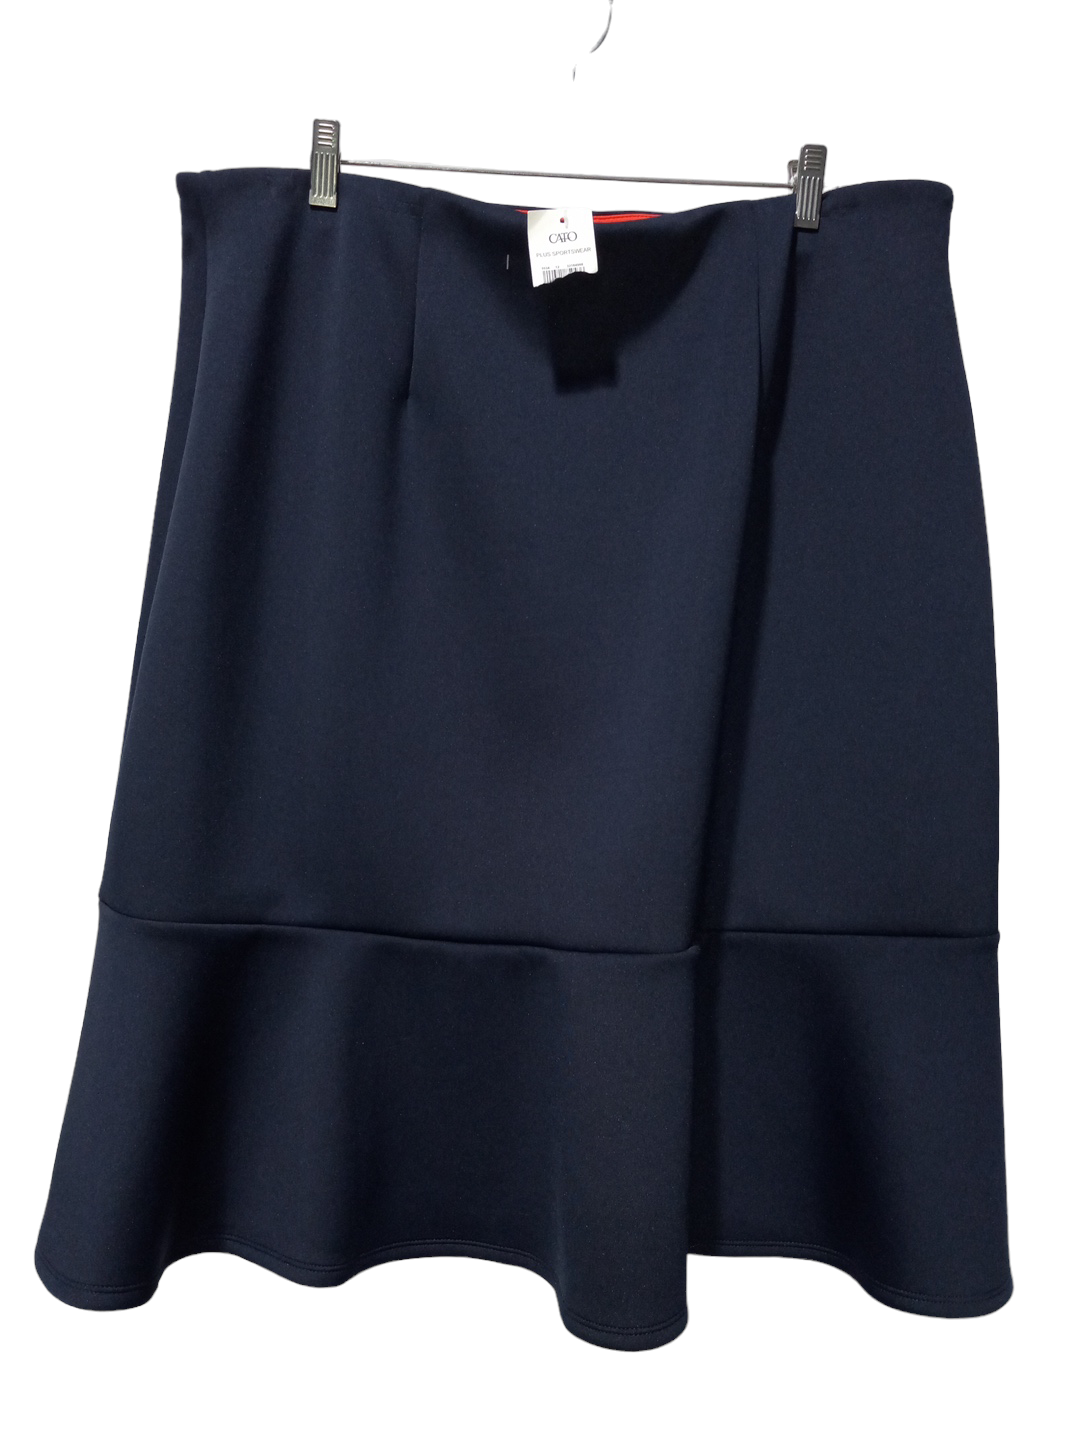 Blue Skirt Maxi Cato, Size 18